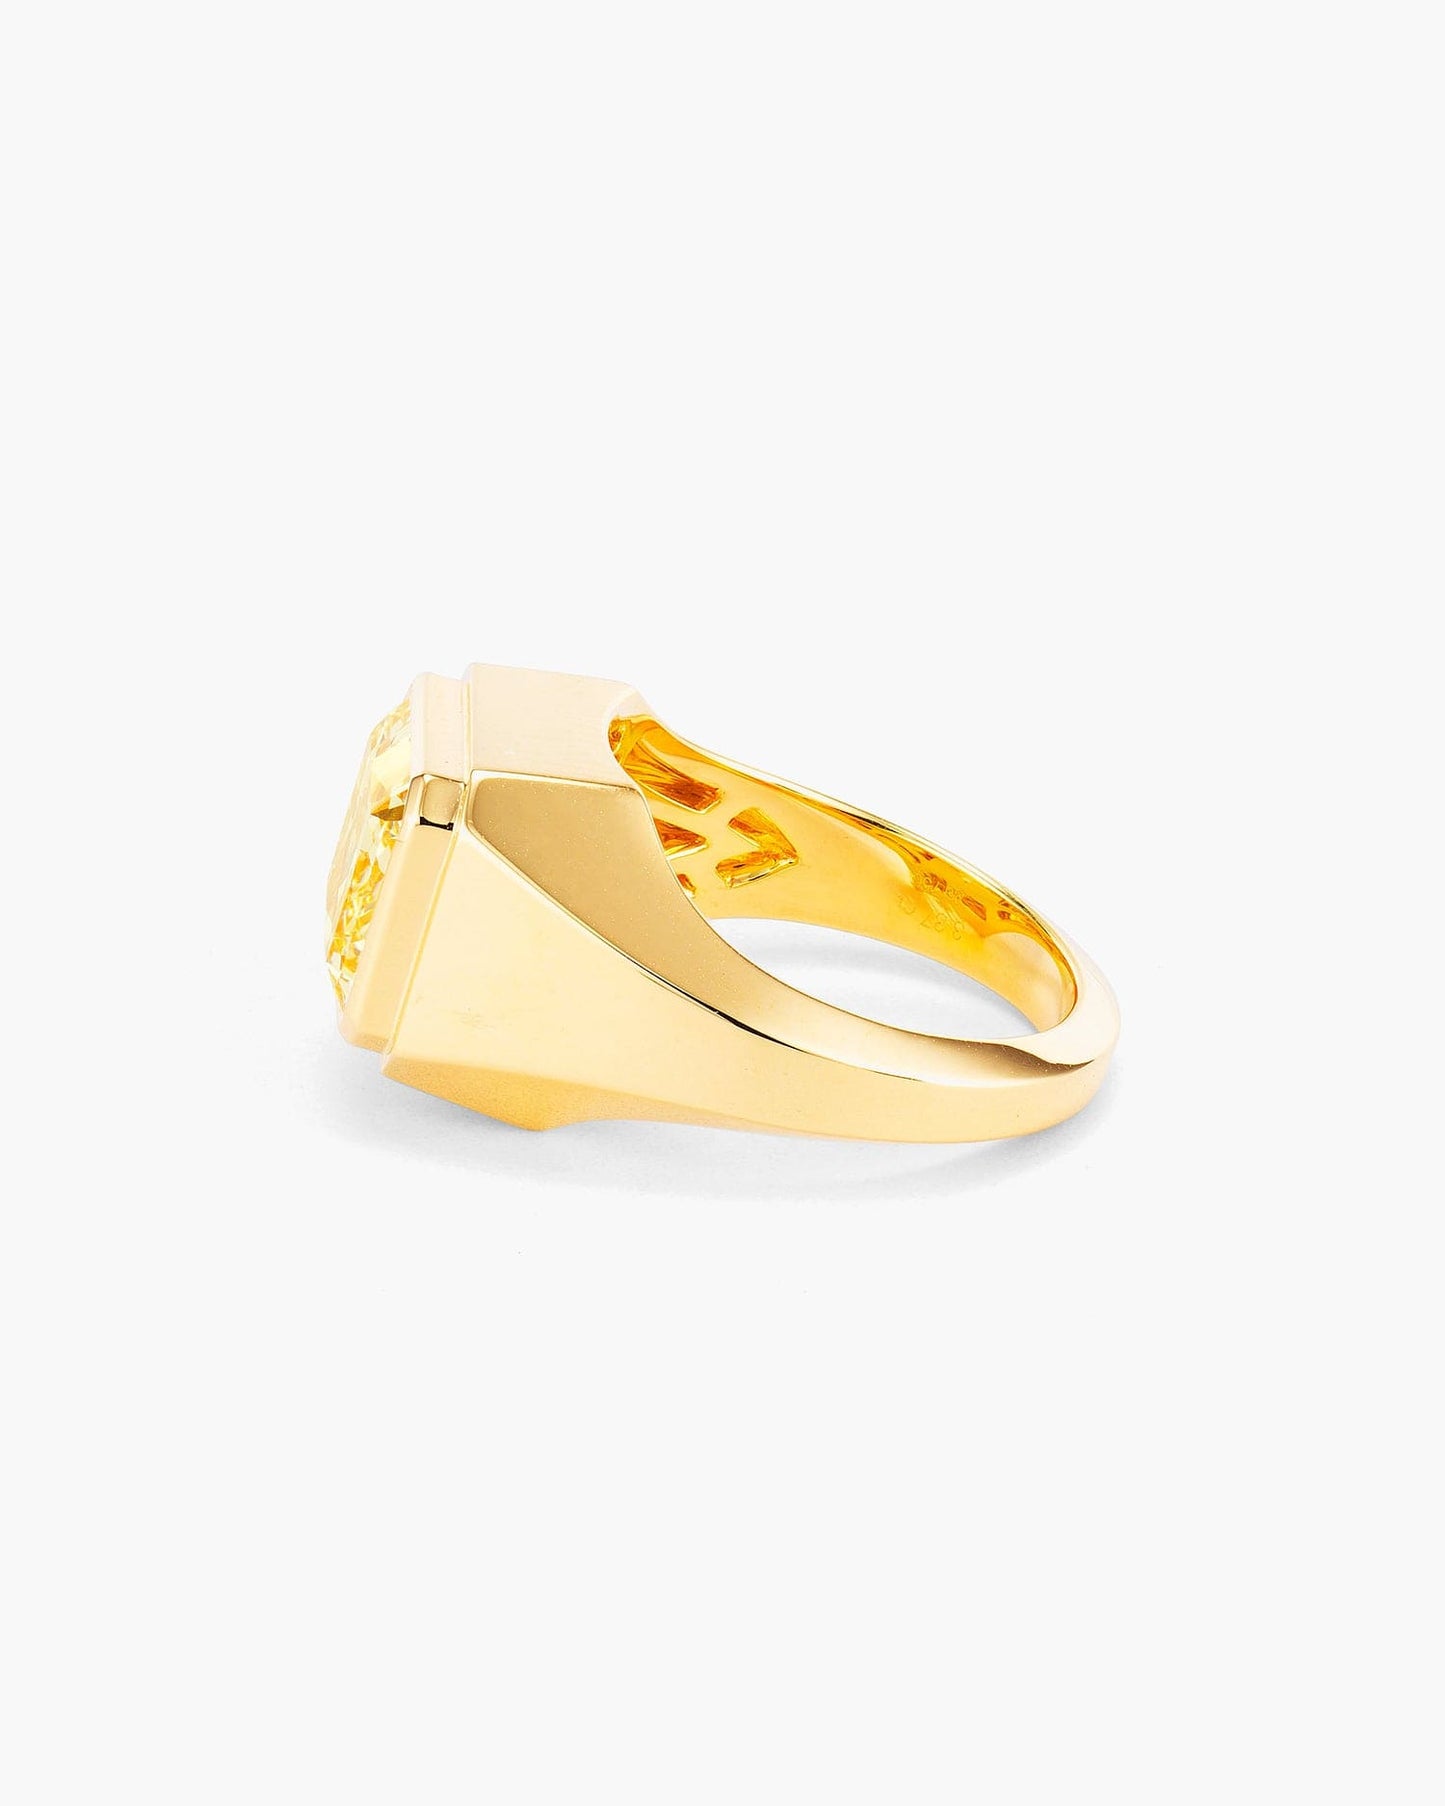 3.37 carat Radiant Cut Yellow Diamond Ring